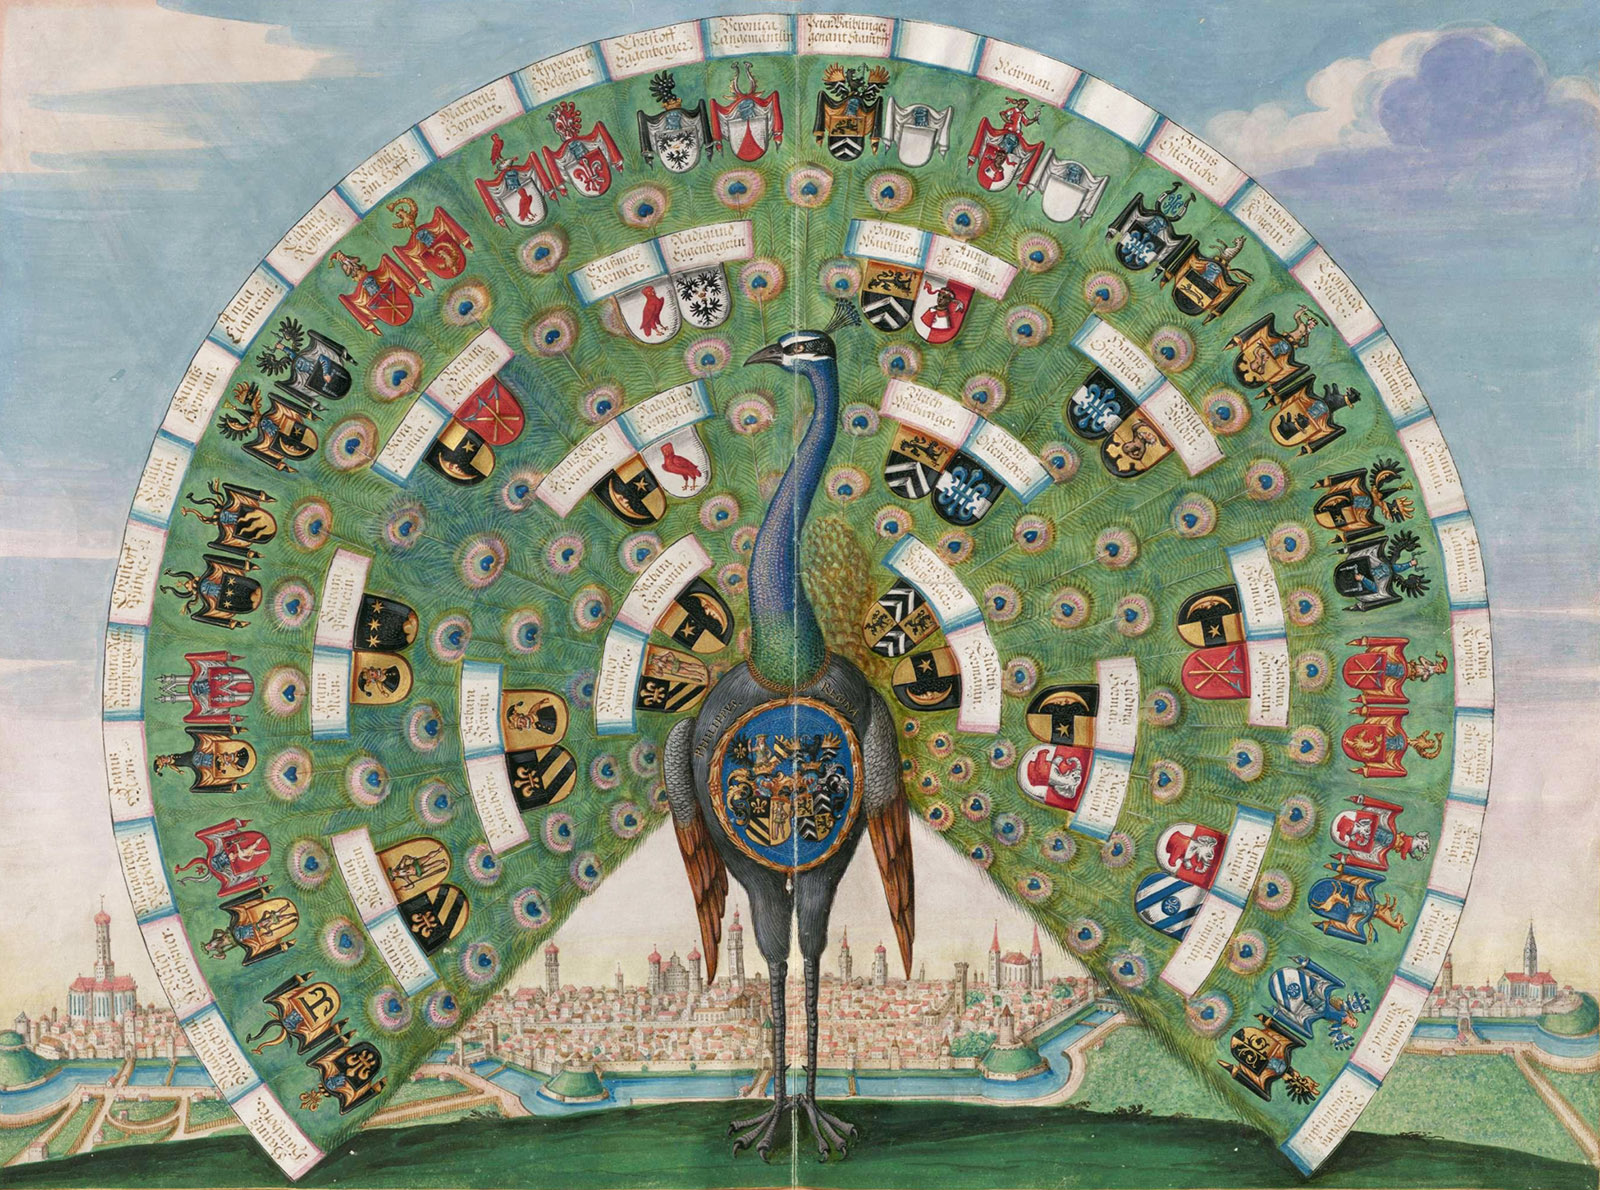 Genealogy of the Hainhofer merchant family of Augsburg